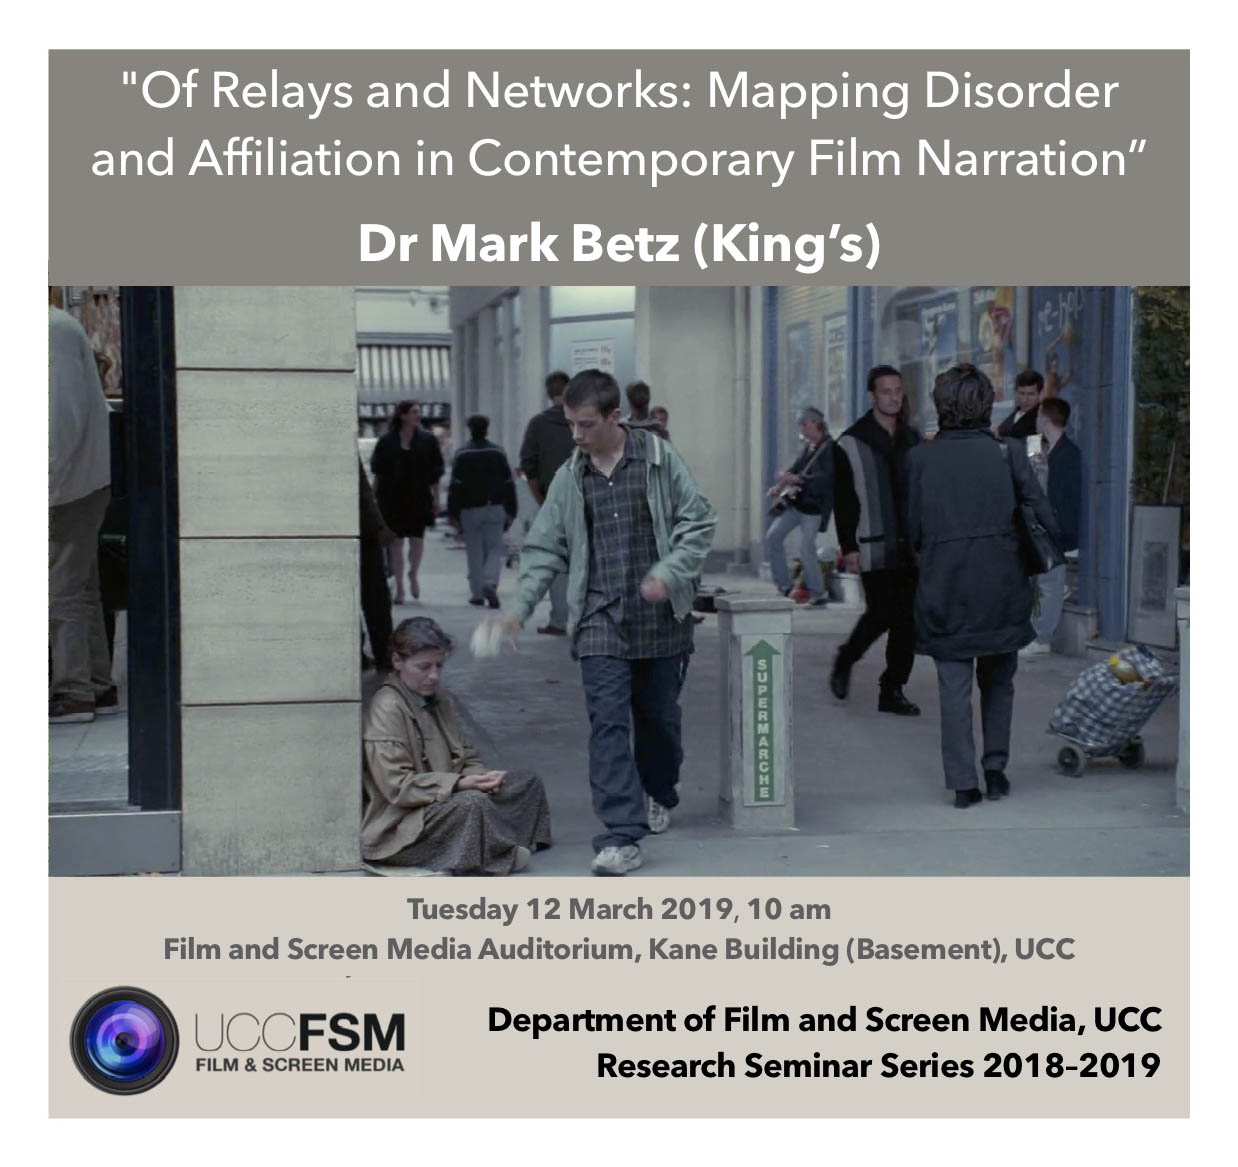 Dr Mark Betz. Research Seminar. 10am, Tues 12 March.